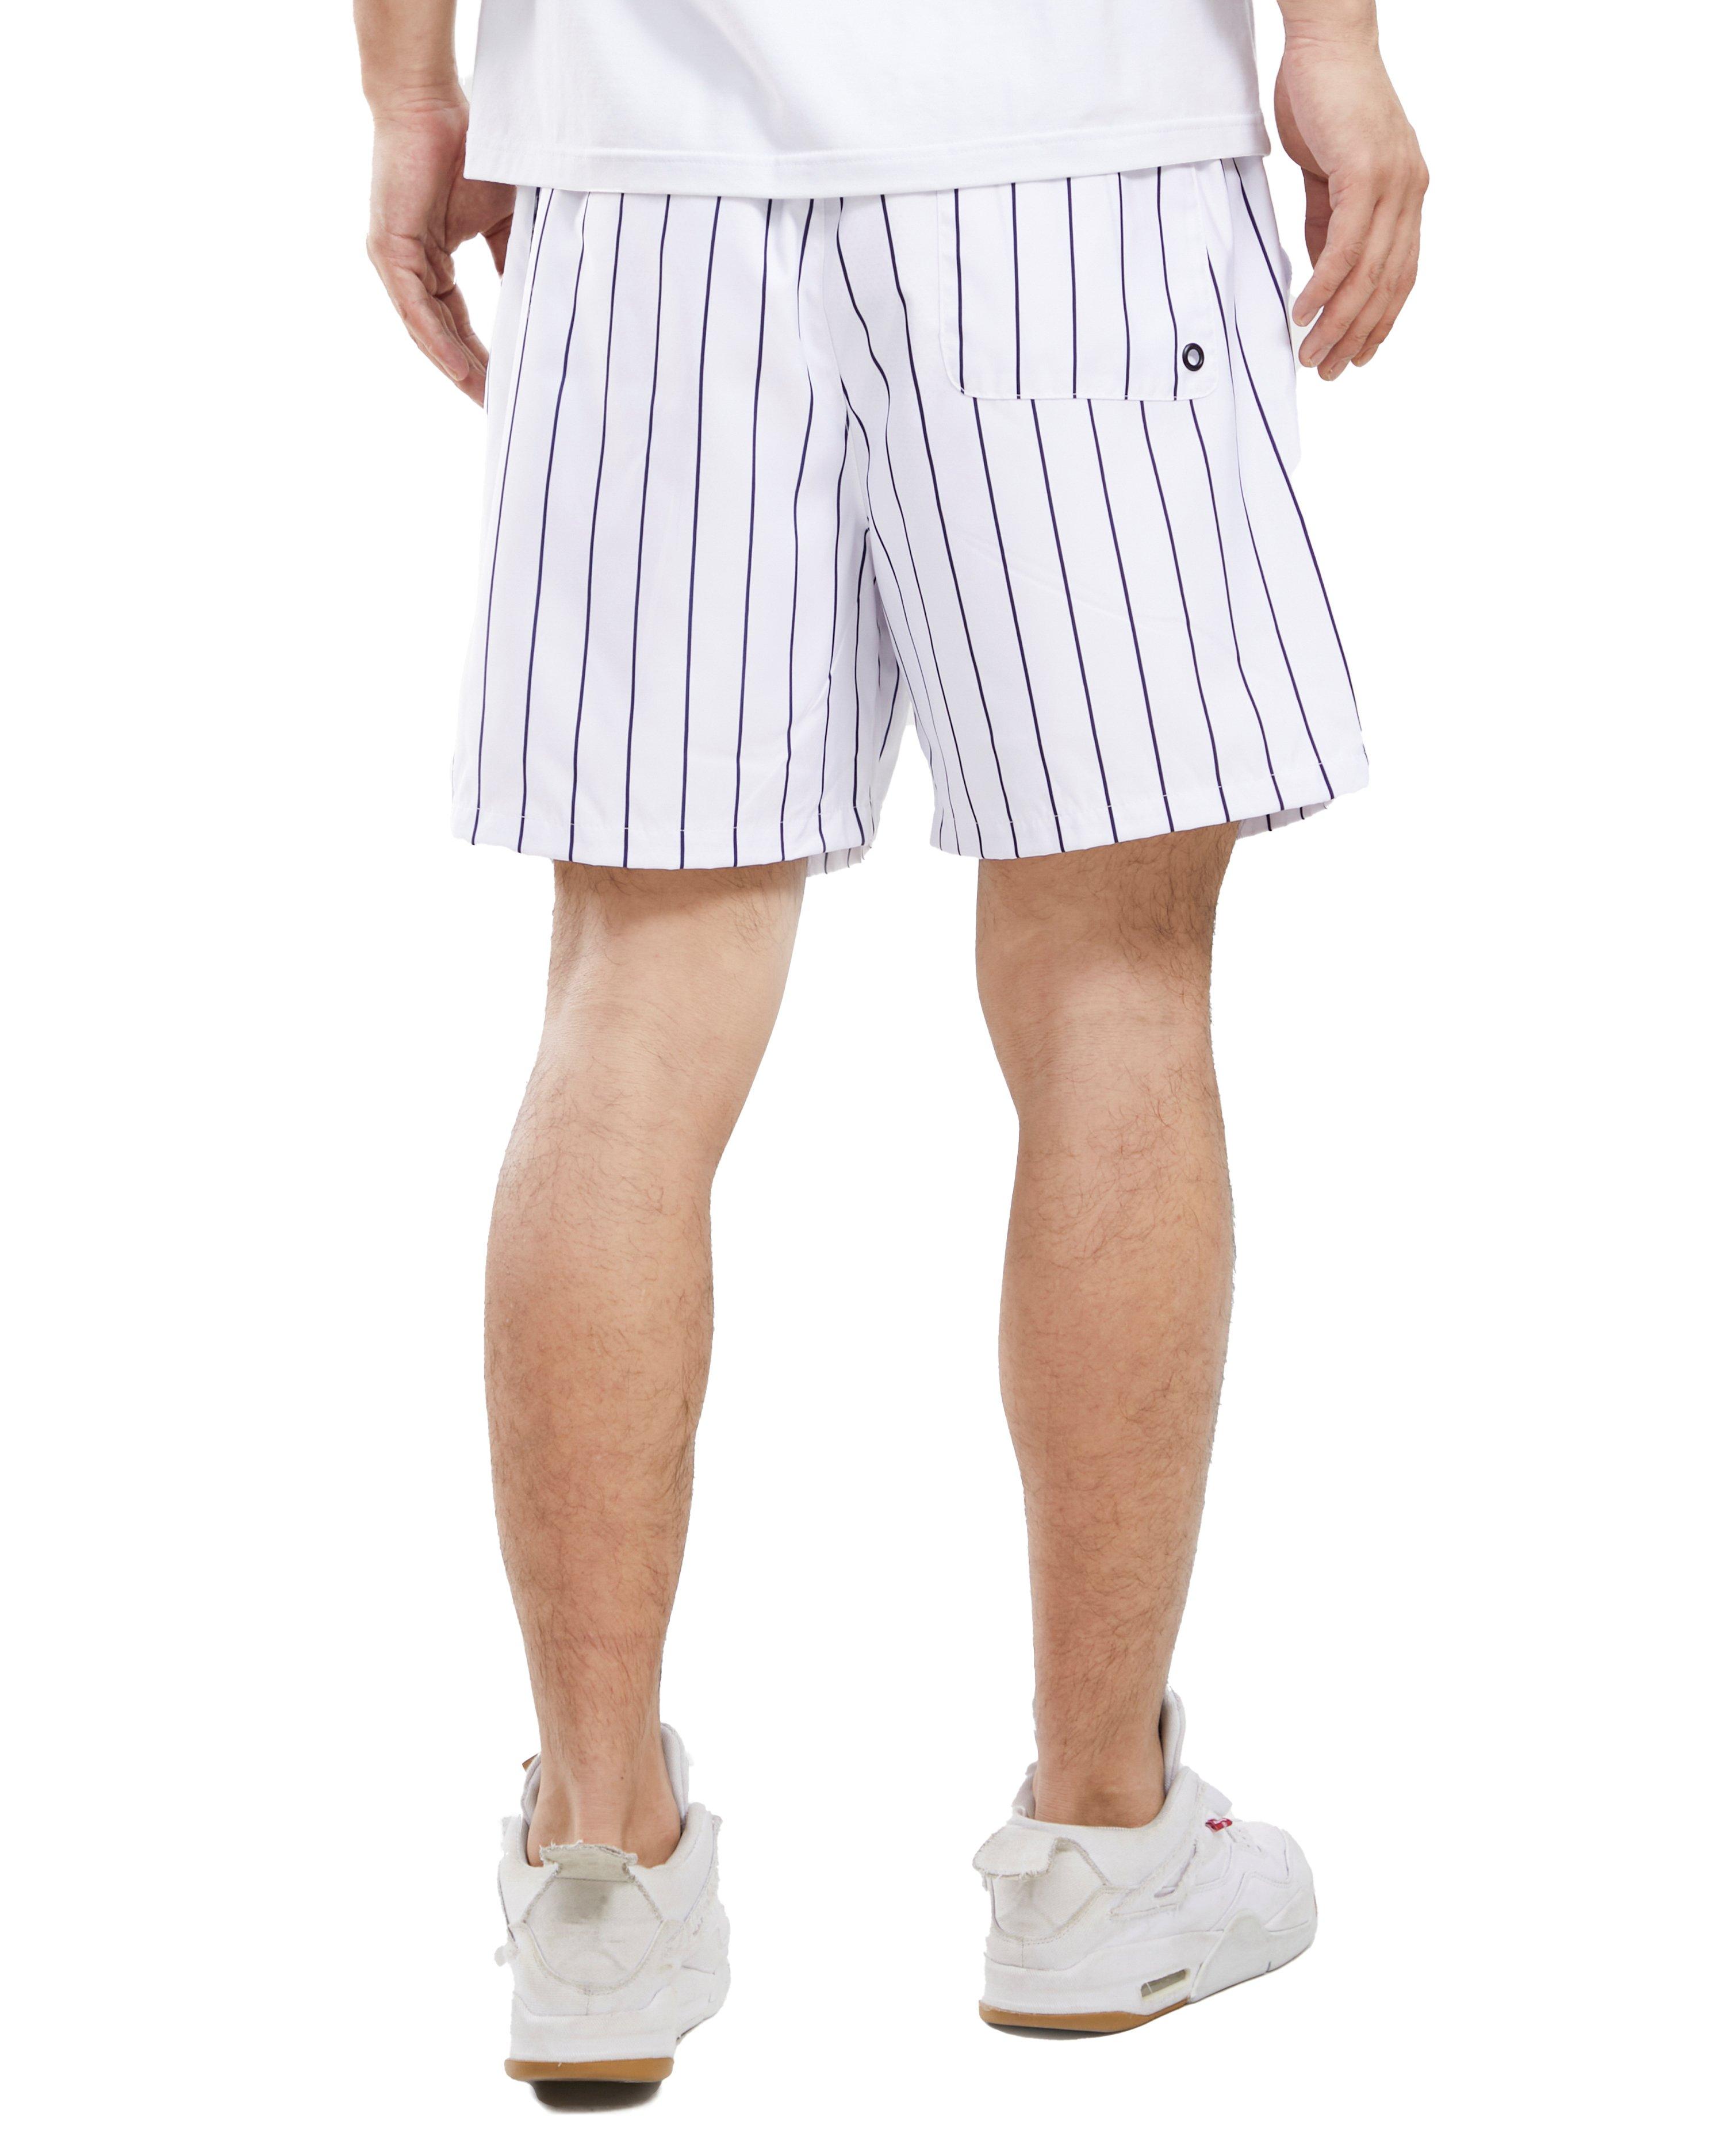 Pro Standard Men's New York Yankees Pinstripe Woven Shorts - Hibbett